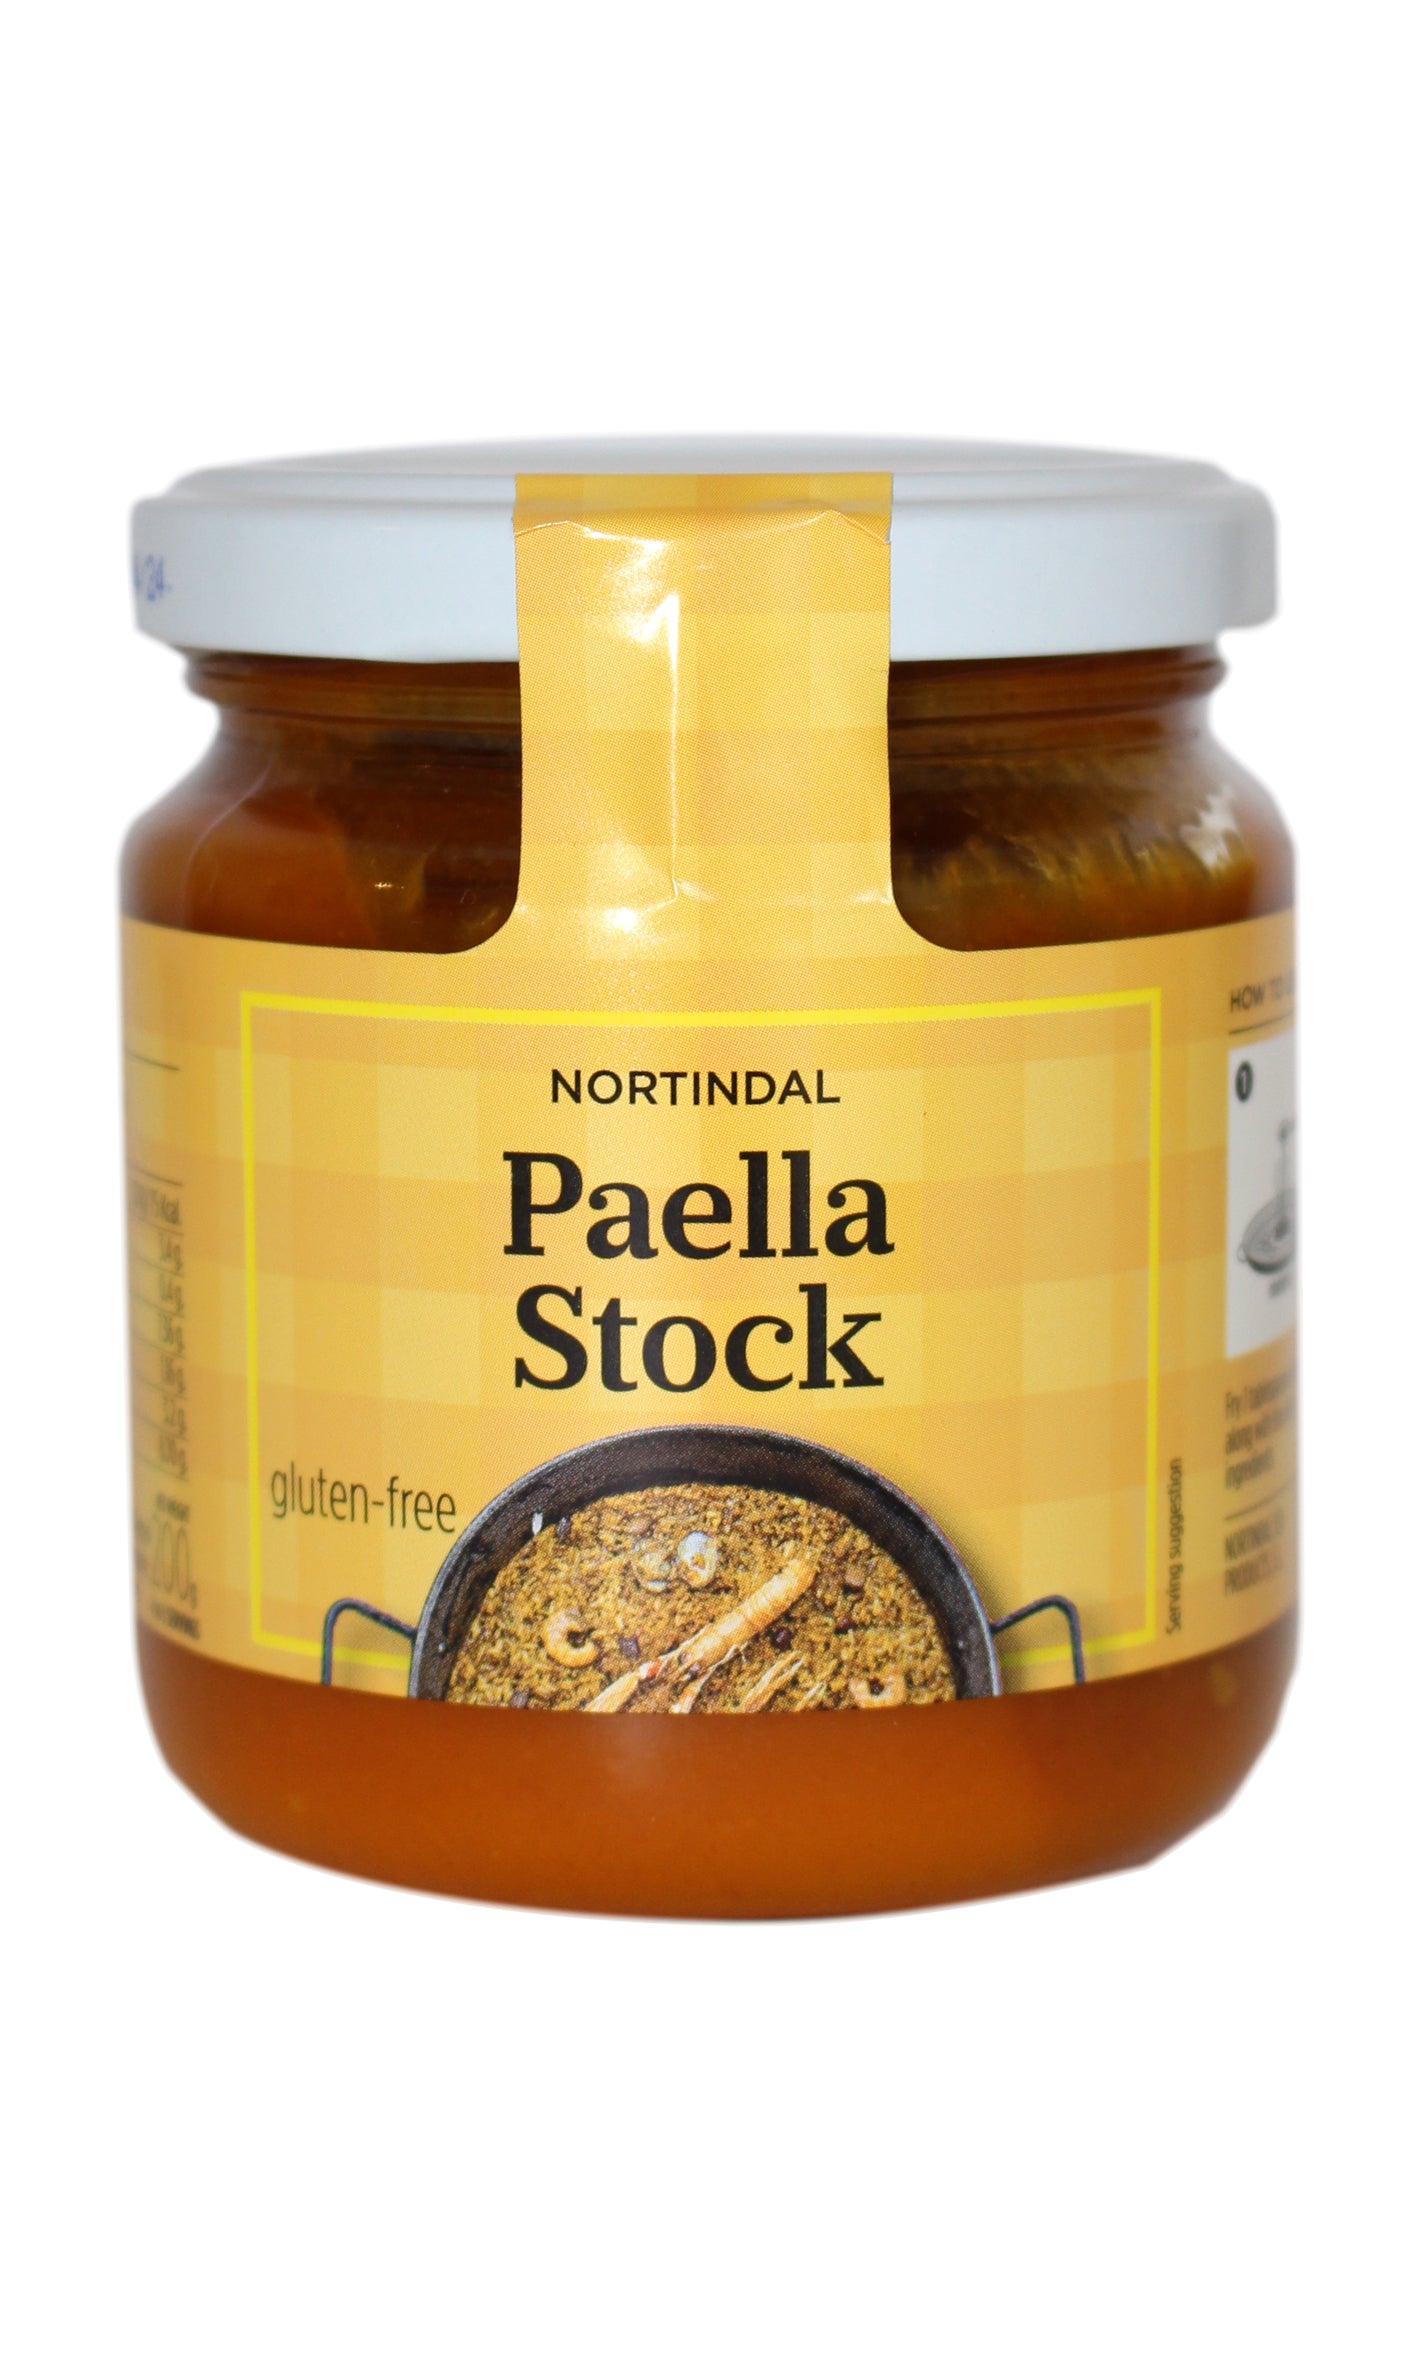 Nortindal: Paella stock - 200g